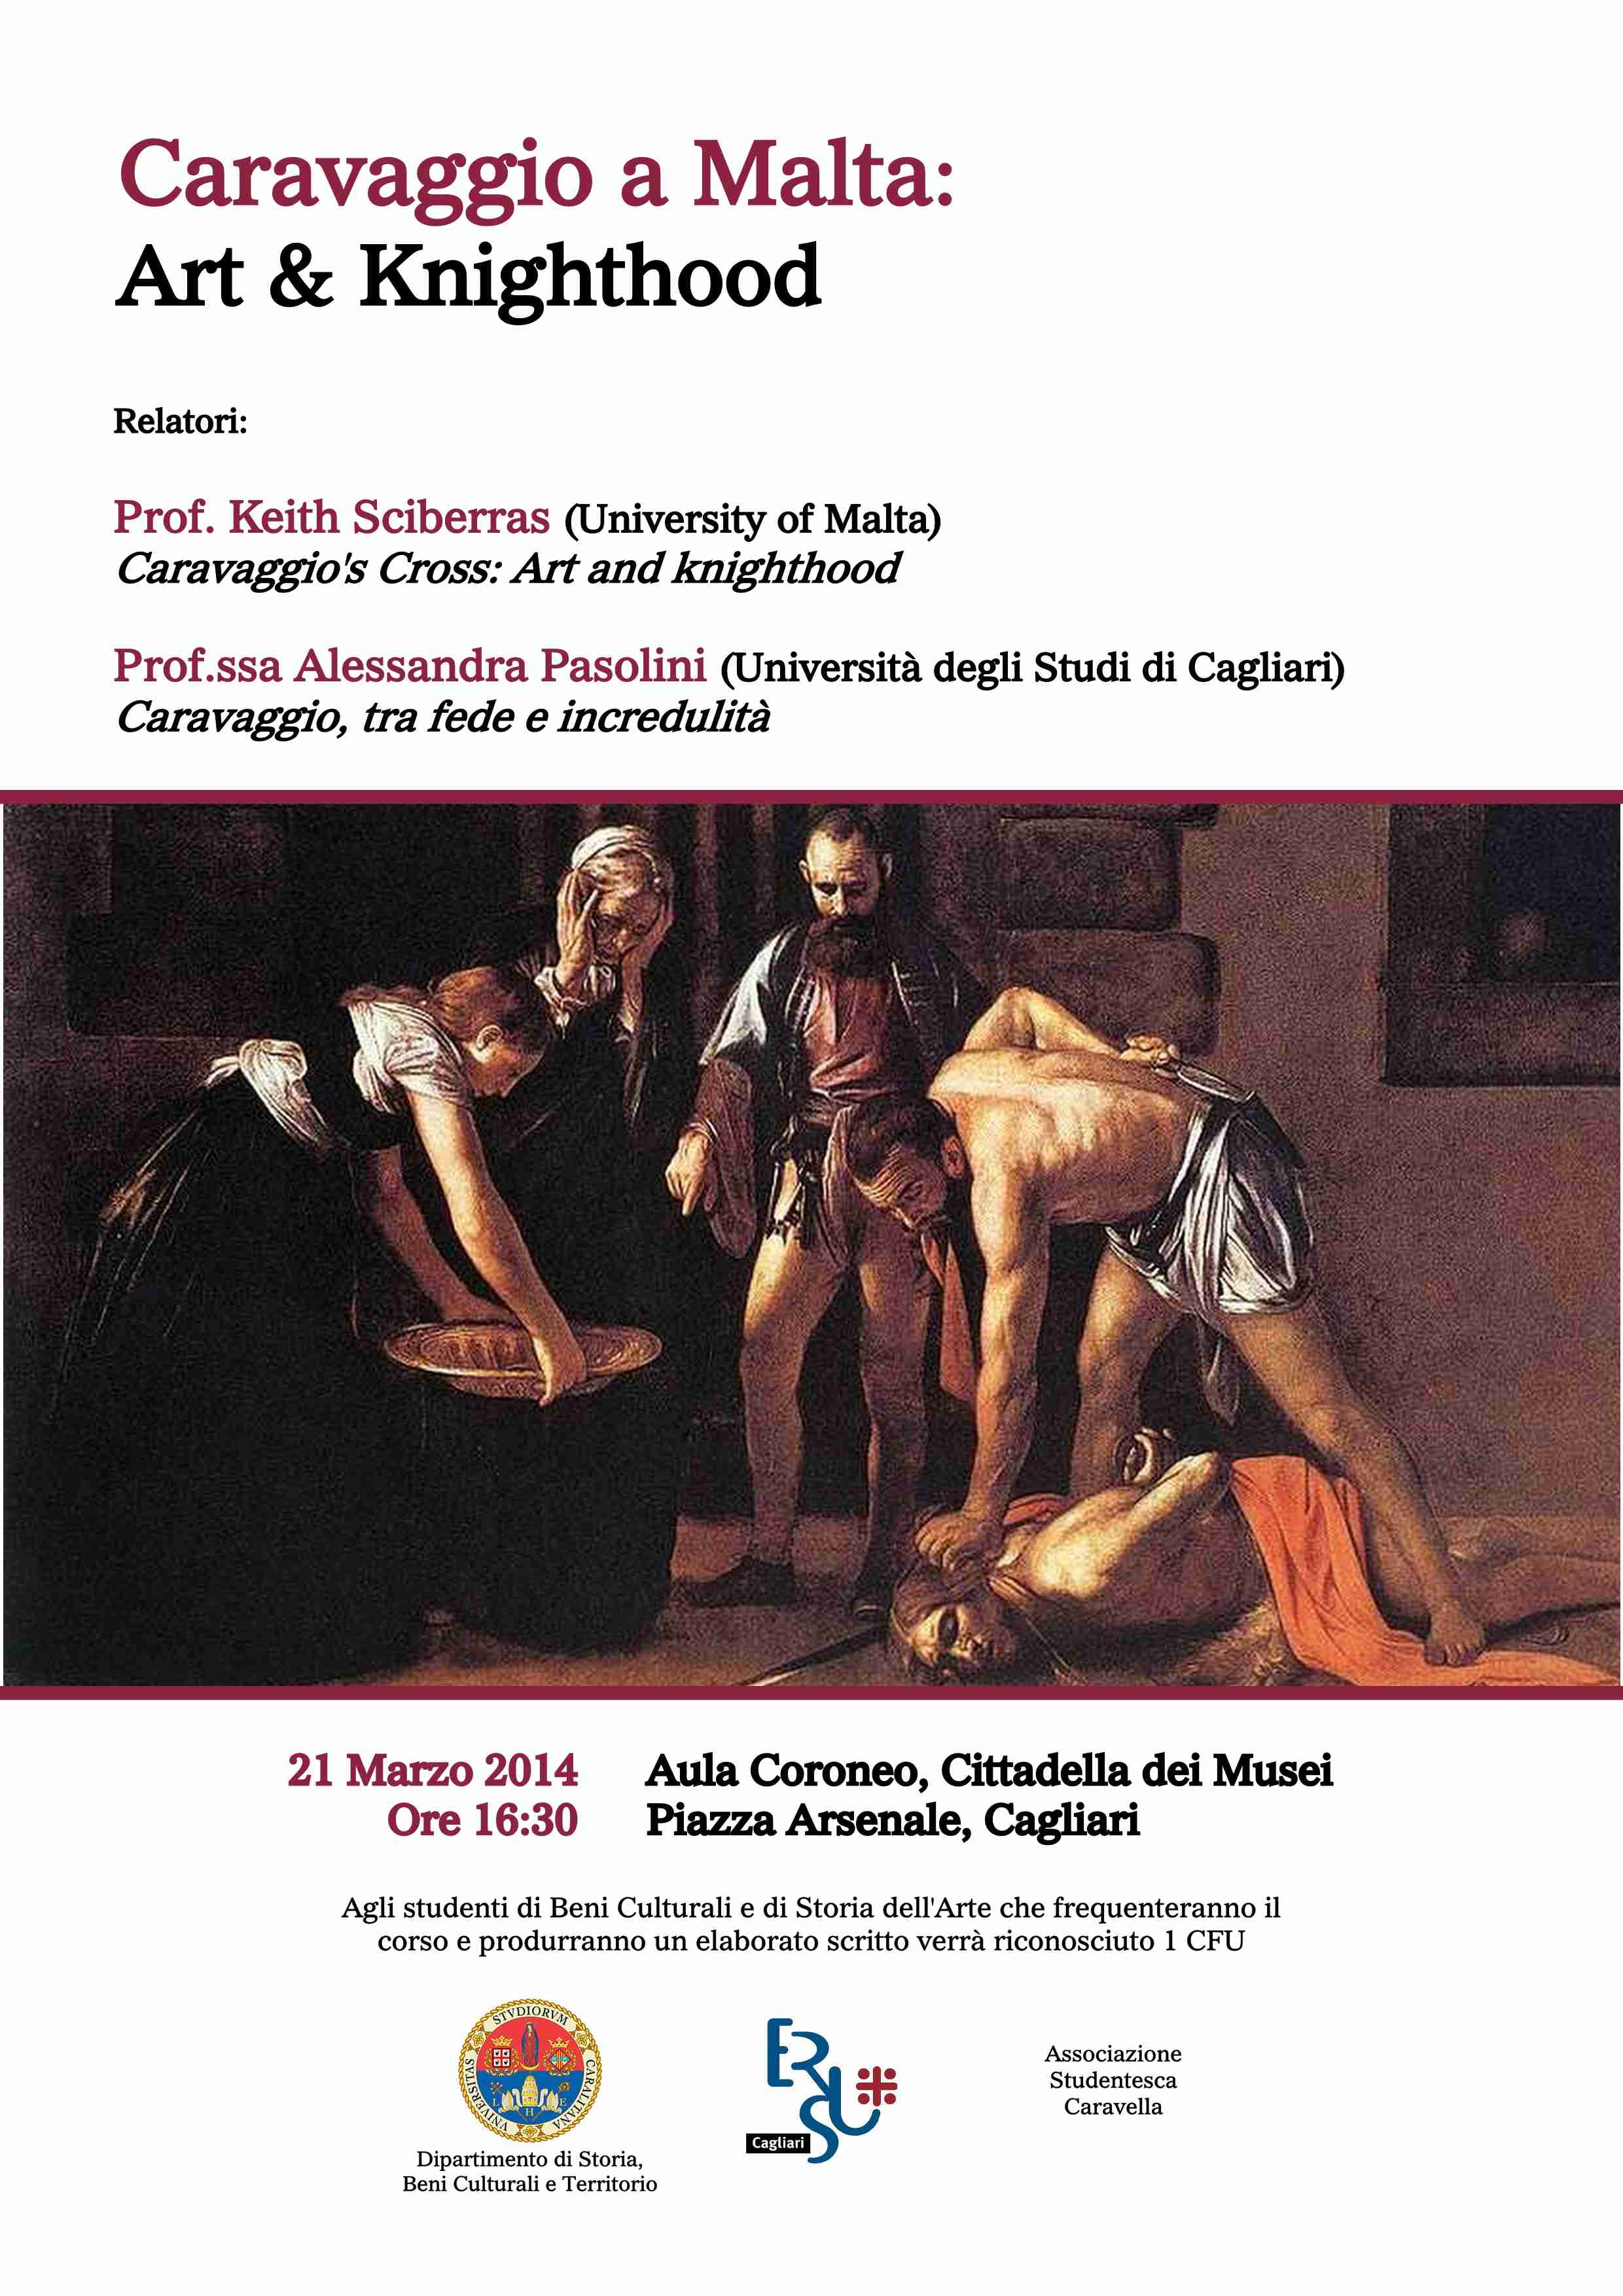 Caravaggio a Malta: Art and Knighthood